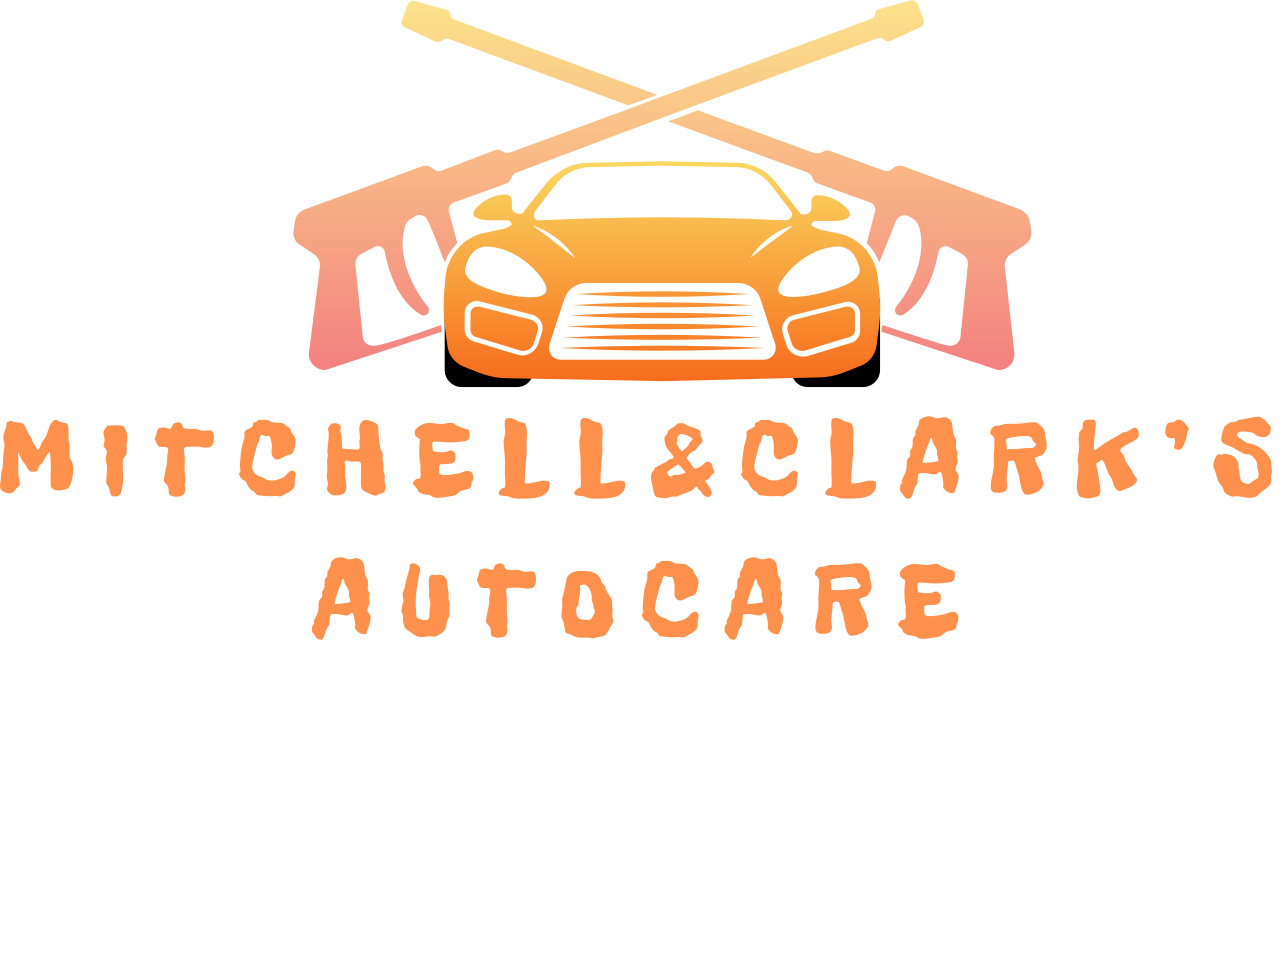 MITCHELL&CLARKS AUOTOCARE's logo